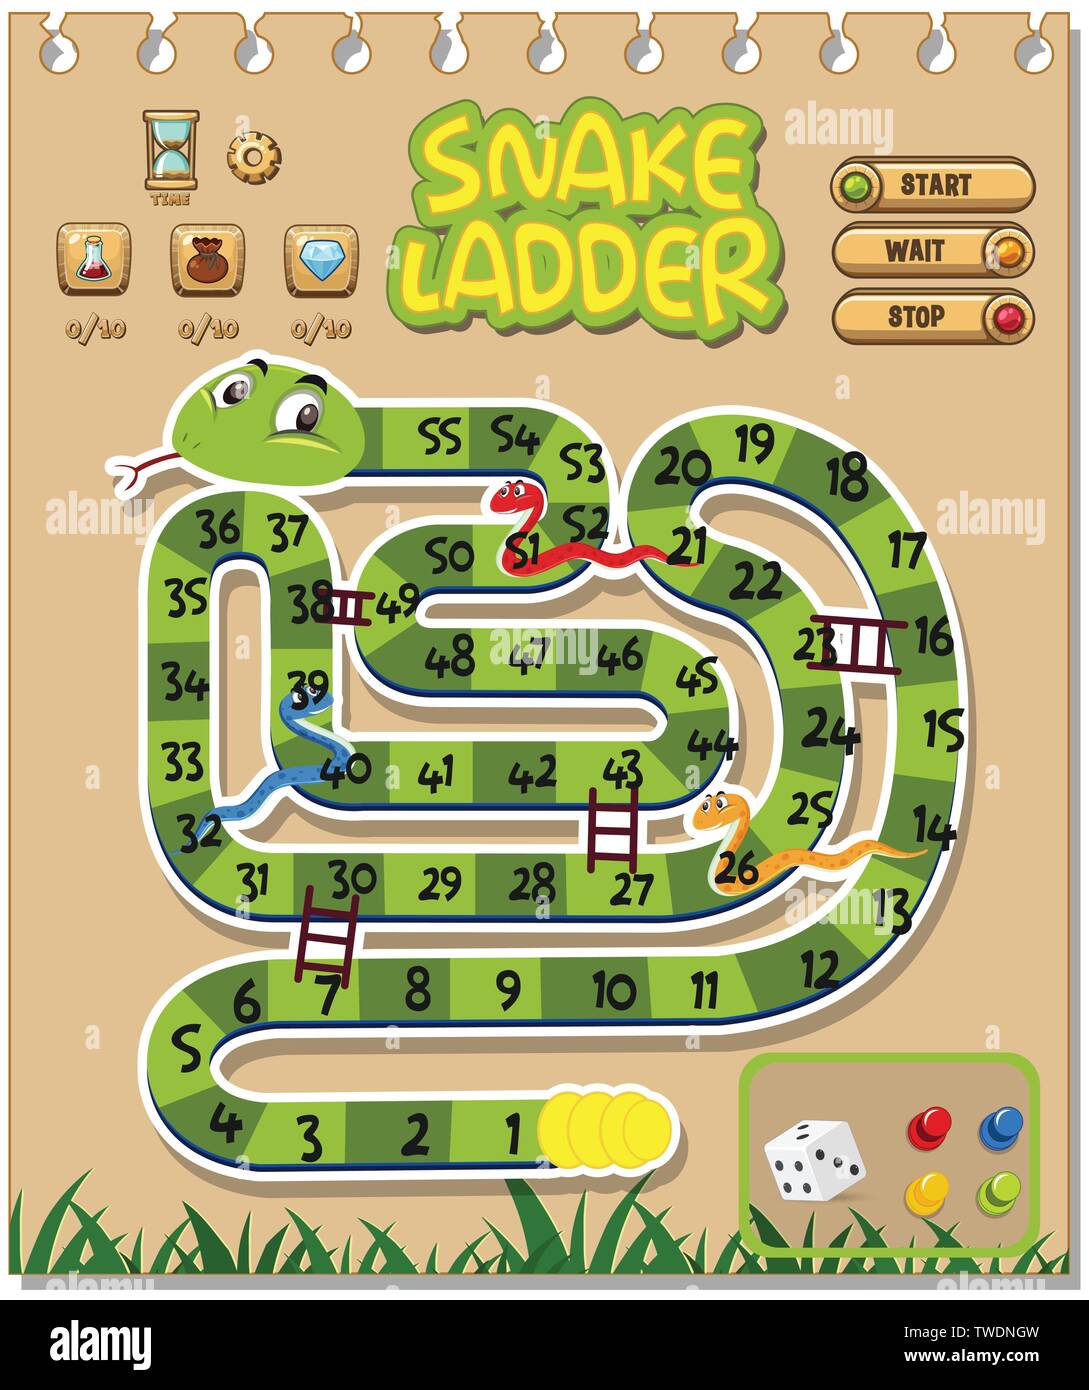 A snake ladder game template illustration stock vector image art